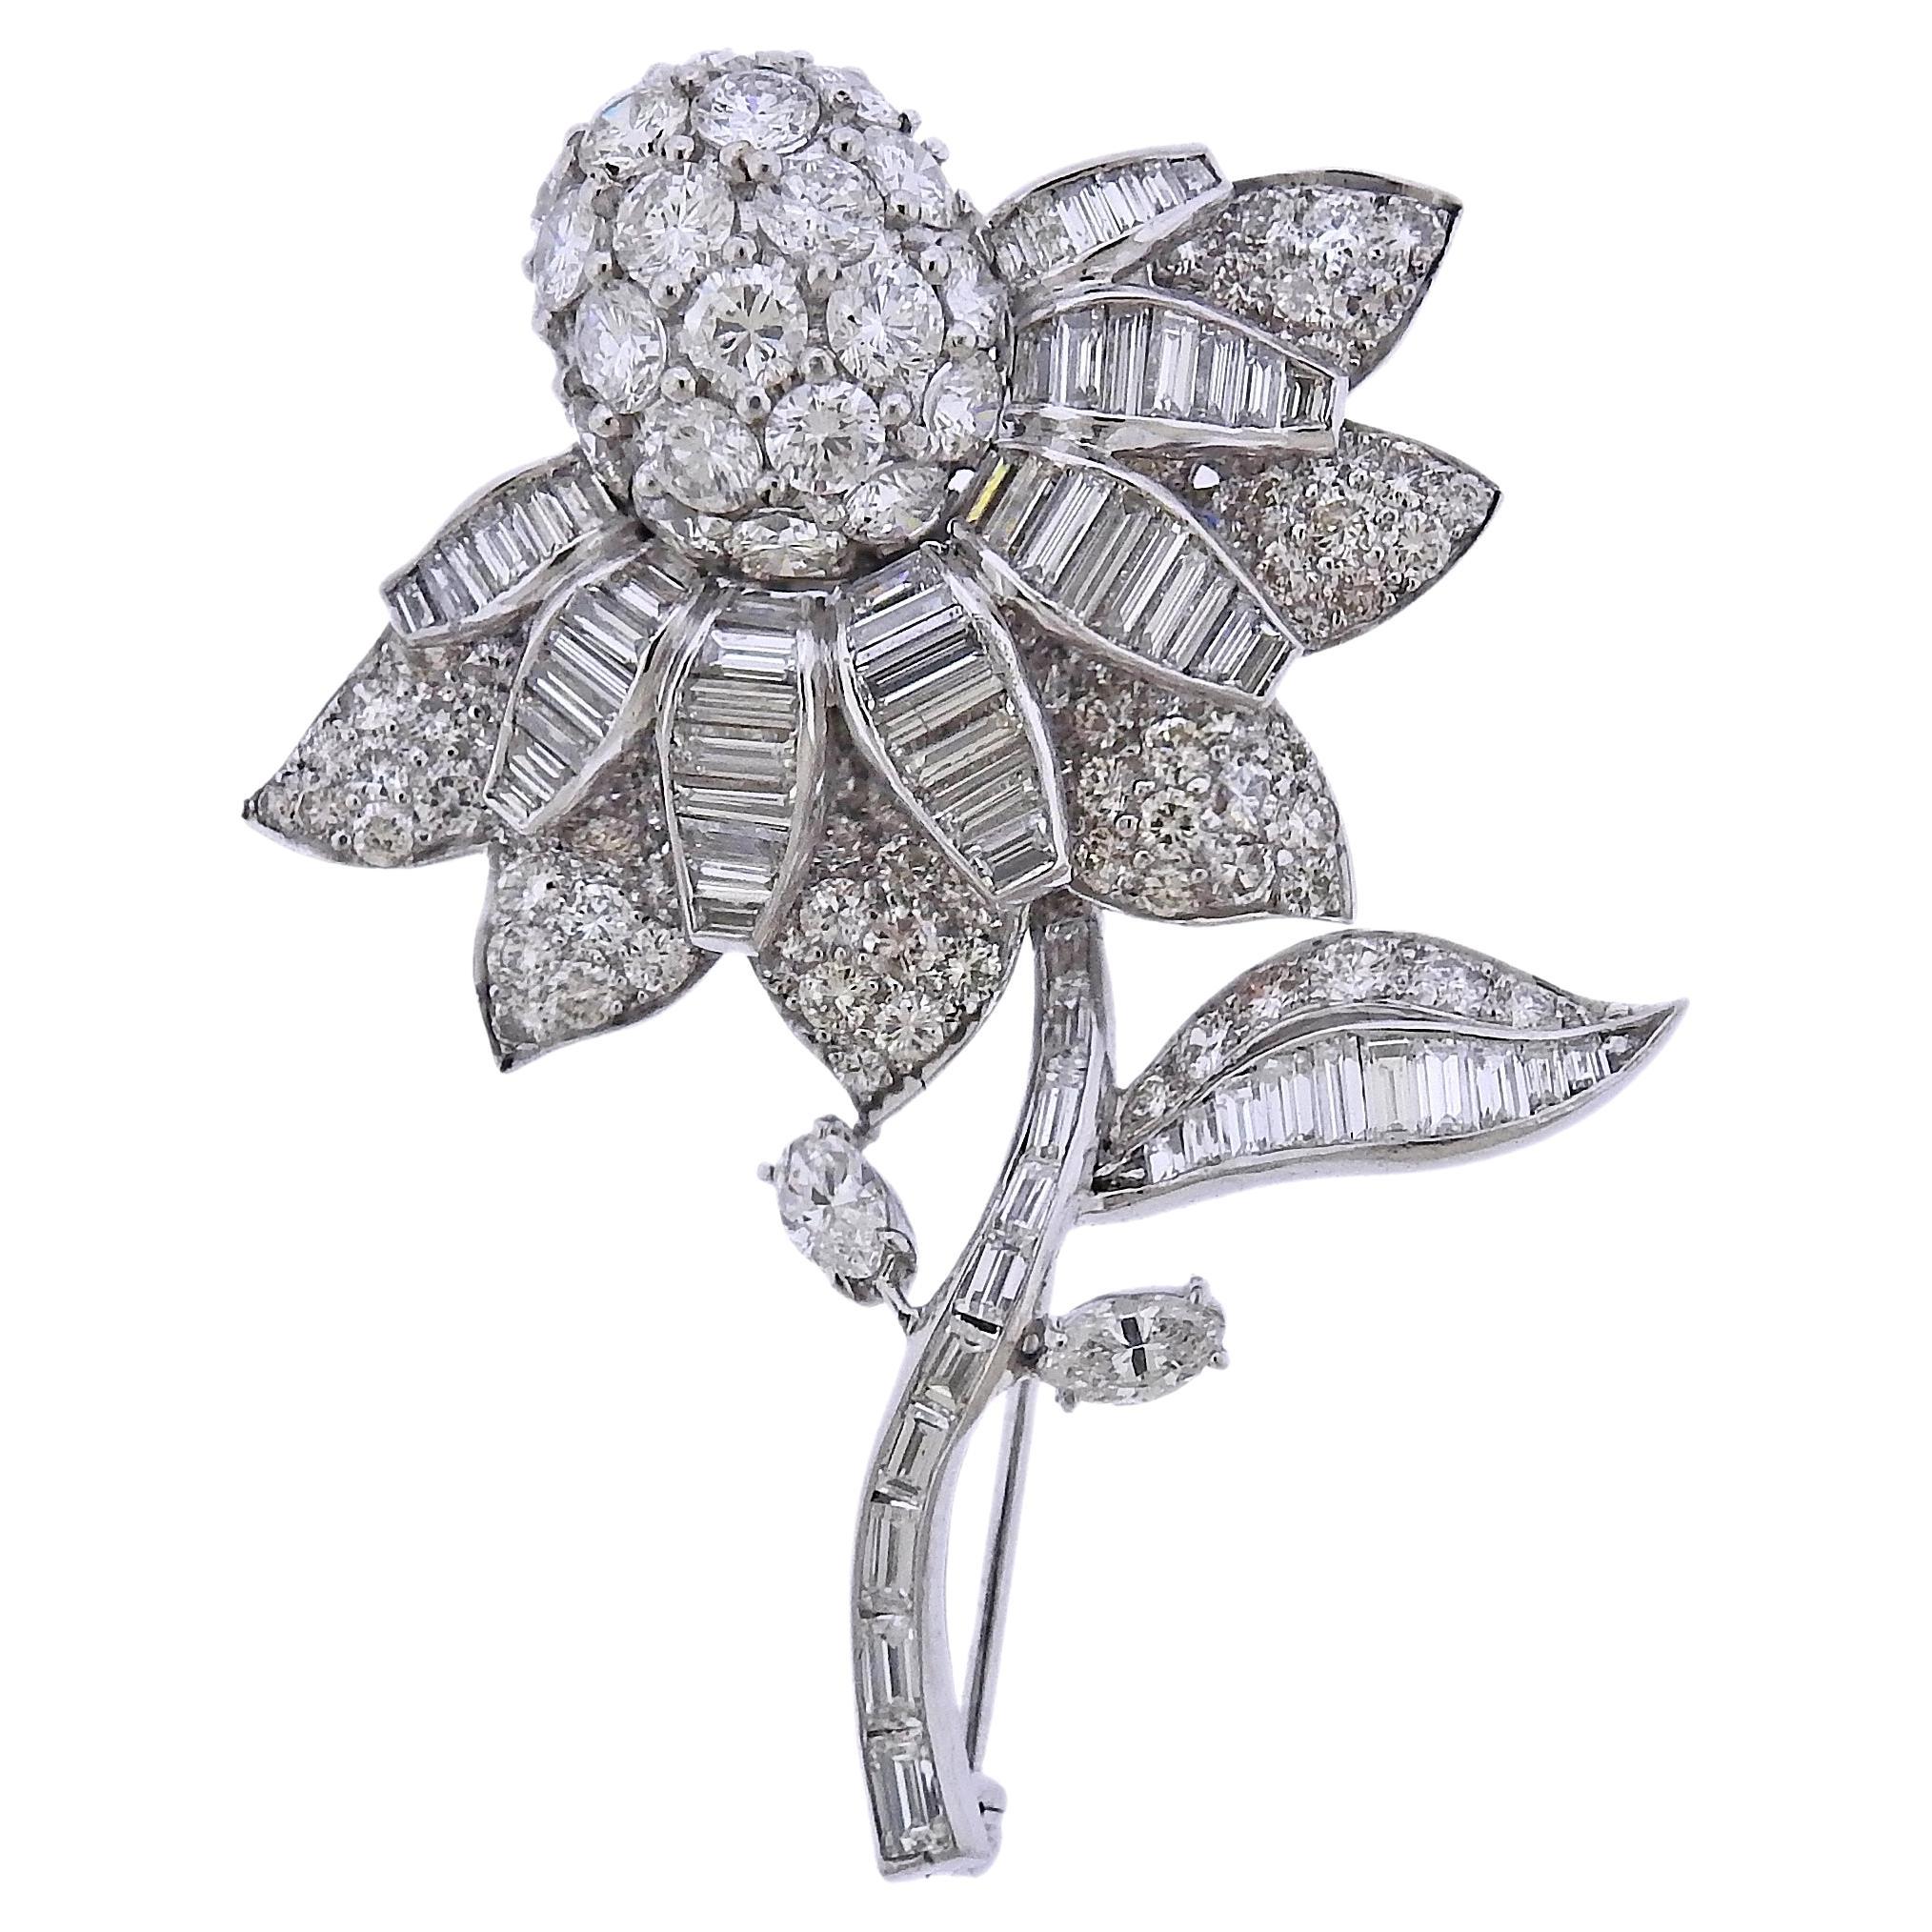 Van Cleef & Arpels - Magnifique broche fleur en platine et diamants de 16 carats